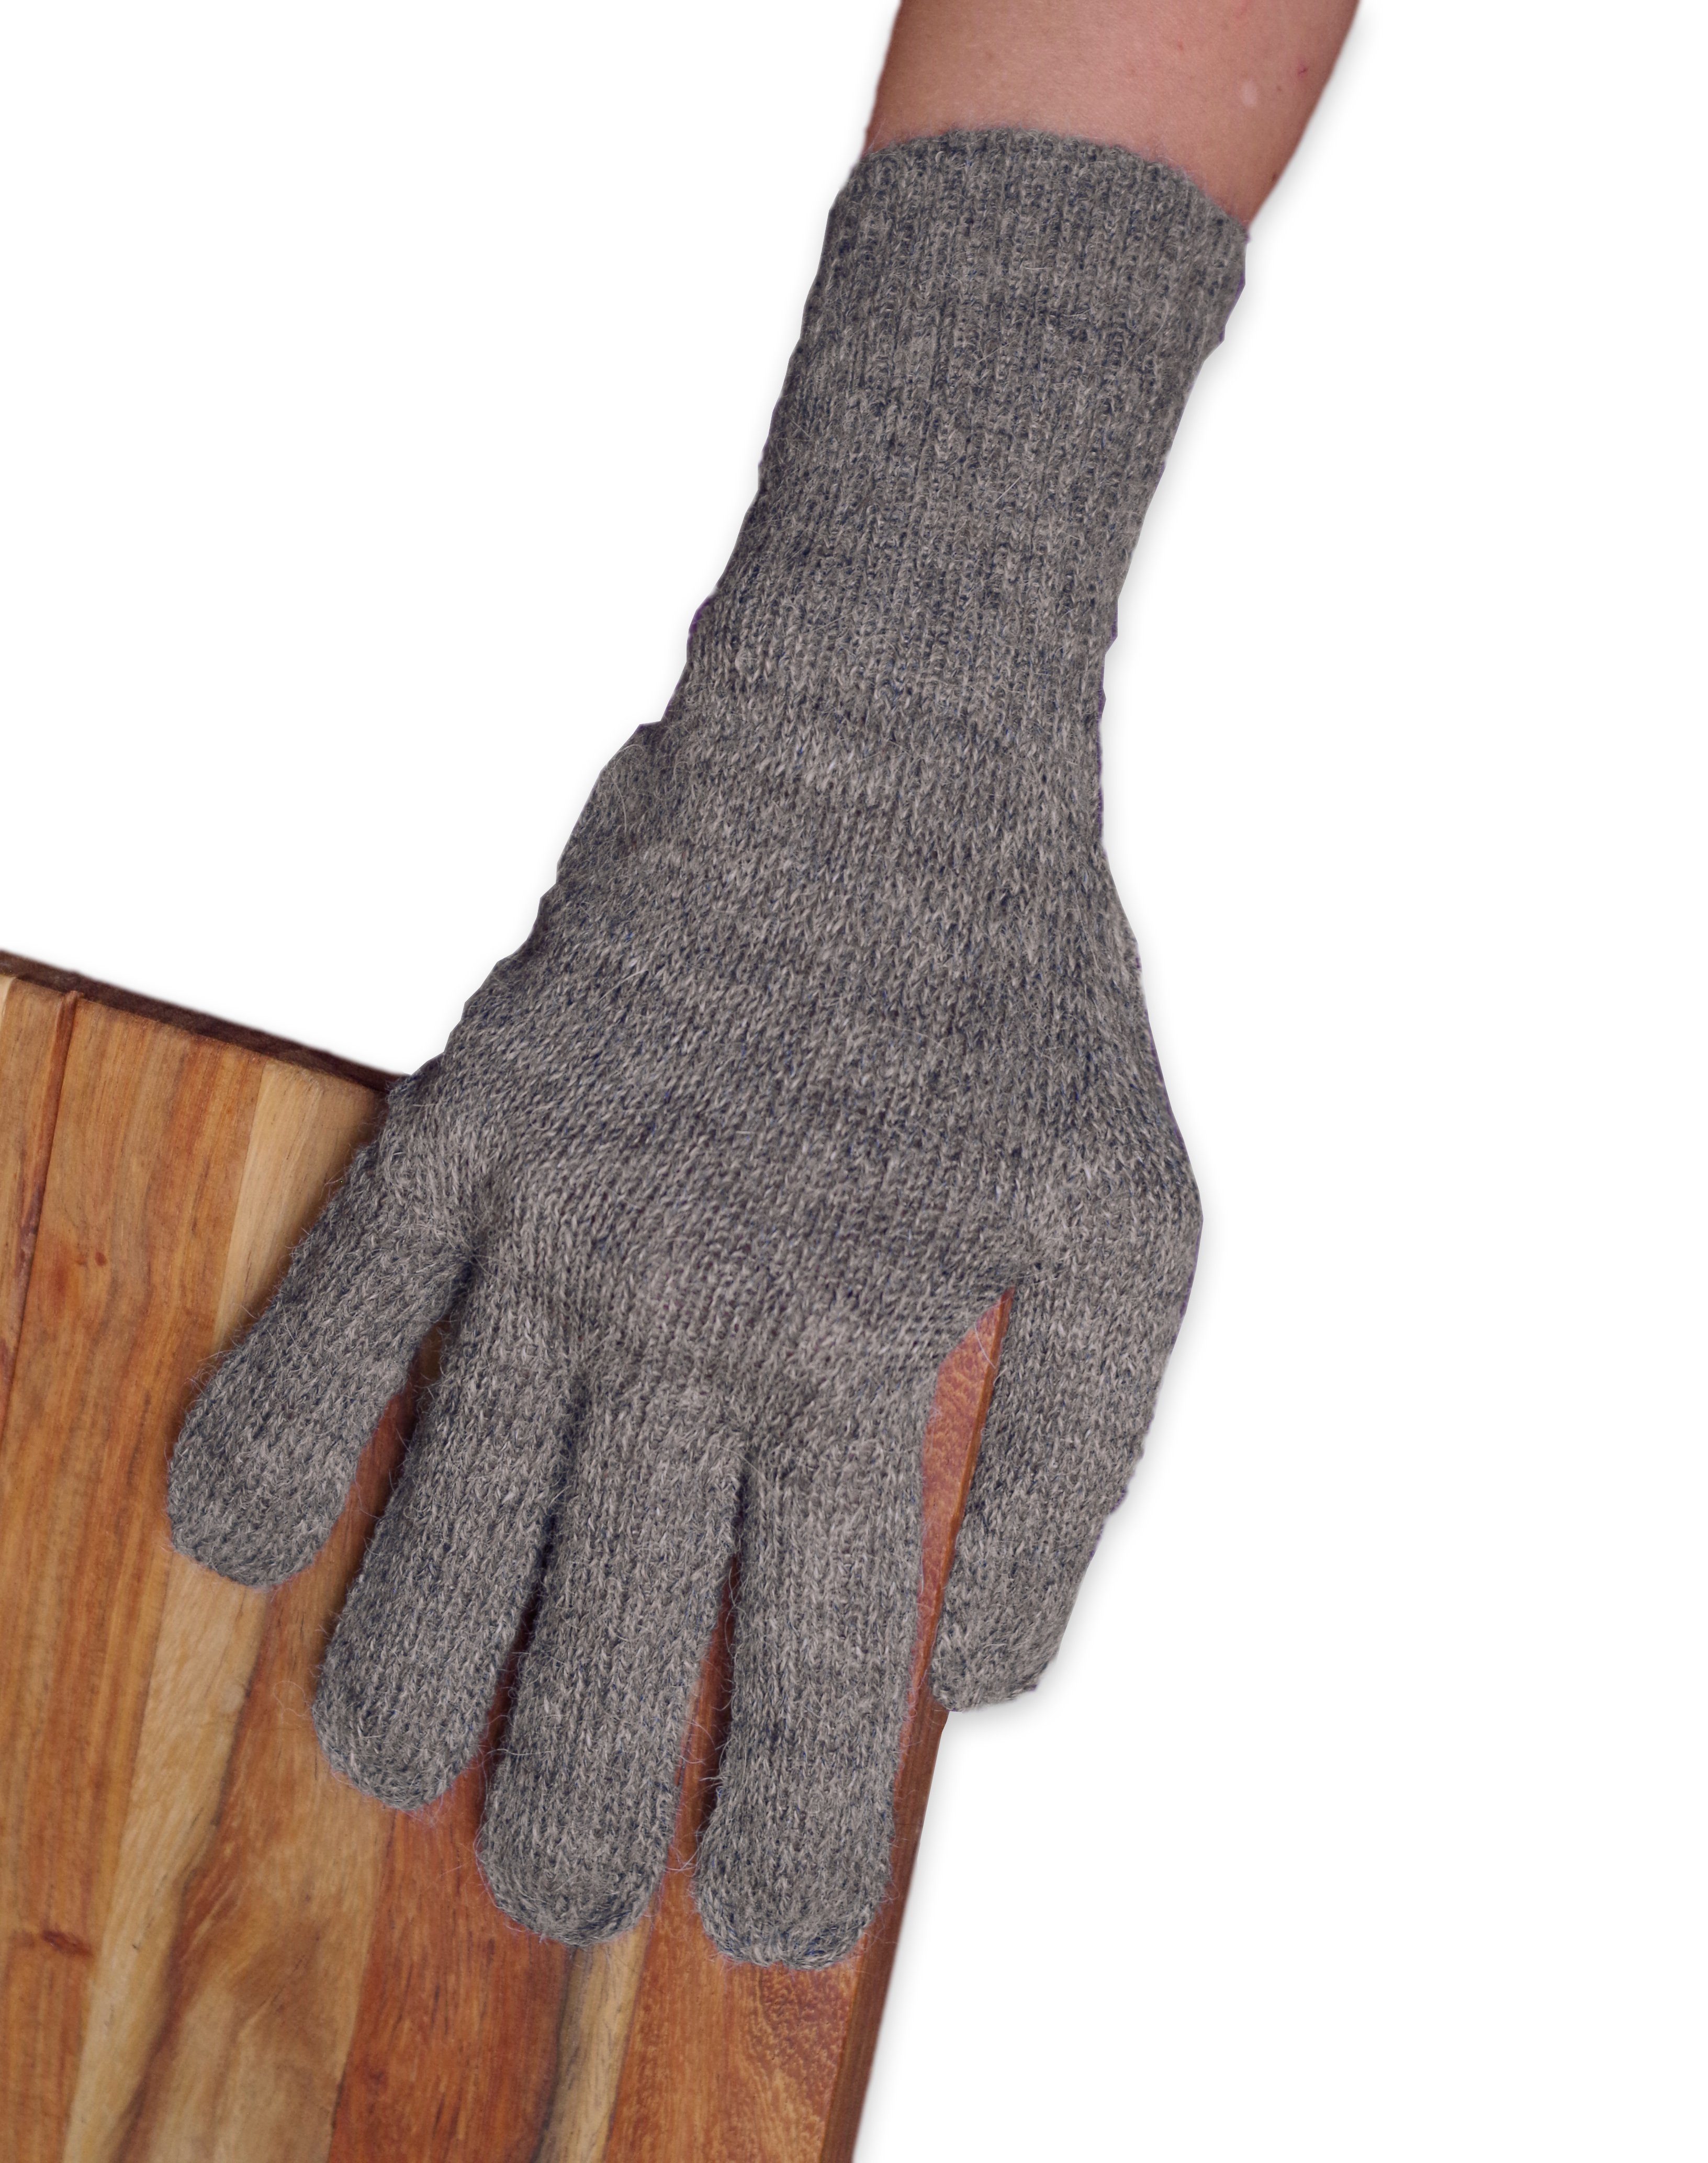 Posh Gear Strickhandschuhe Alpakawolle 100% Guantino Alpaka Fingerhandschuhe dunkel grau aus